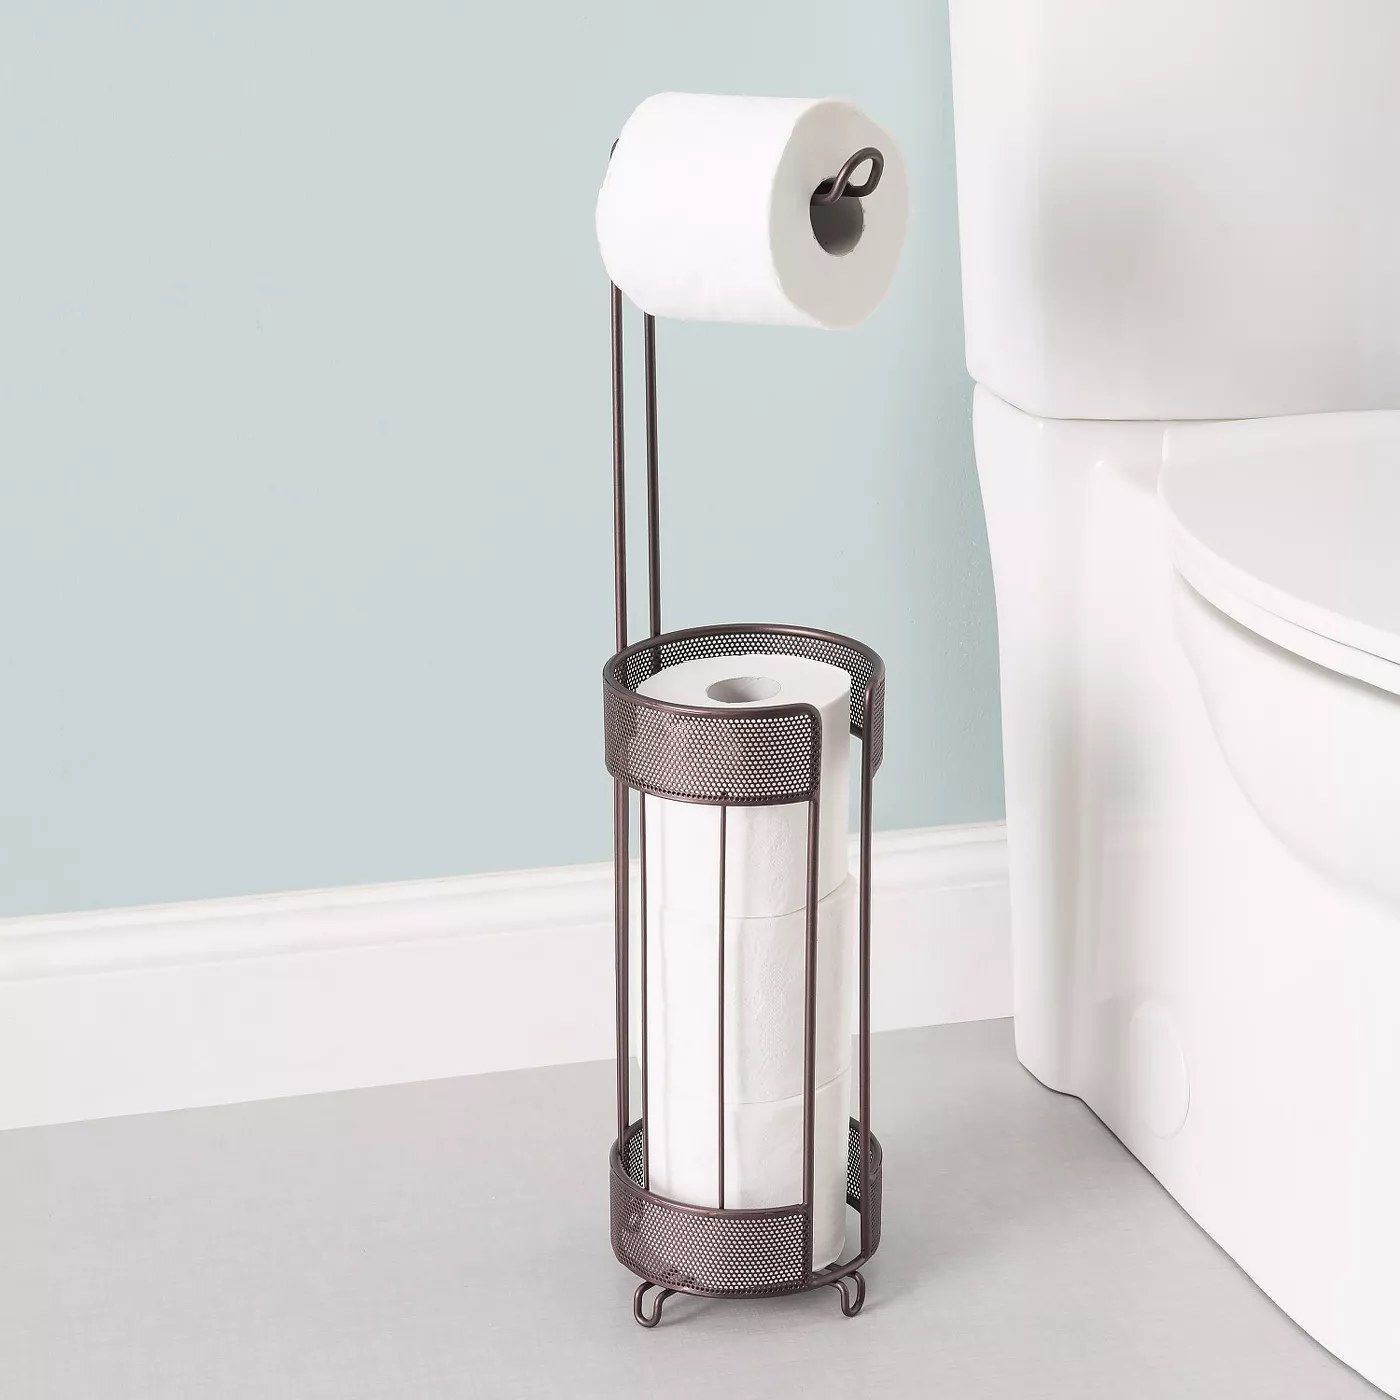 The bronze toilet paper dispenser holding four rolls of toilet paper